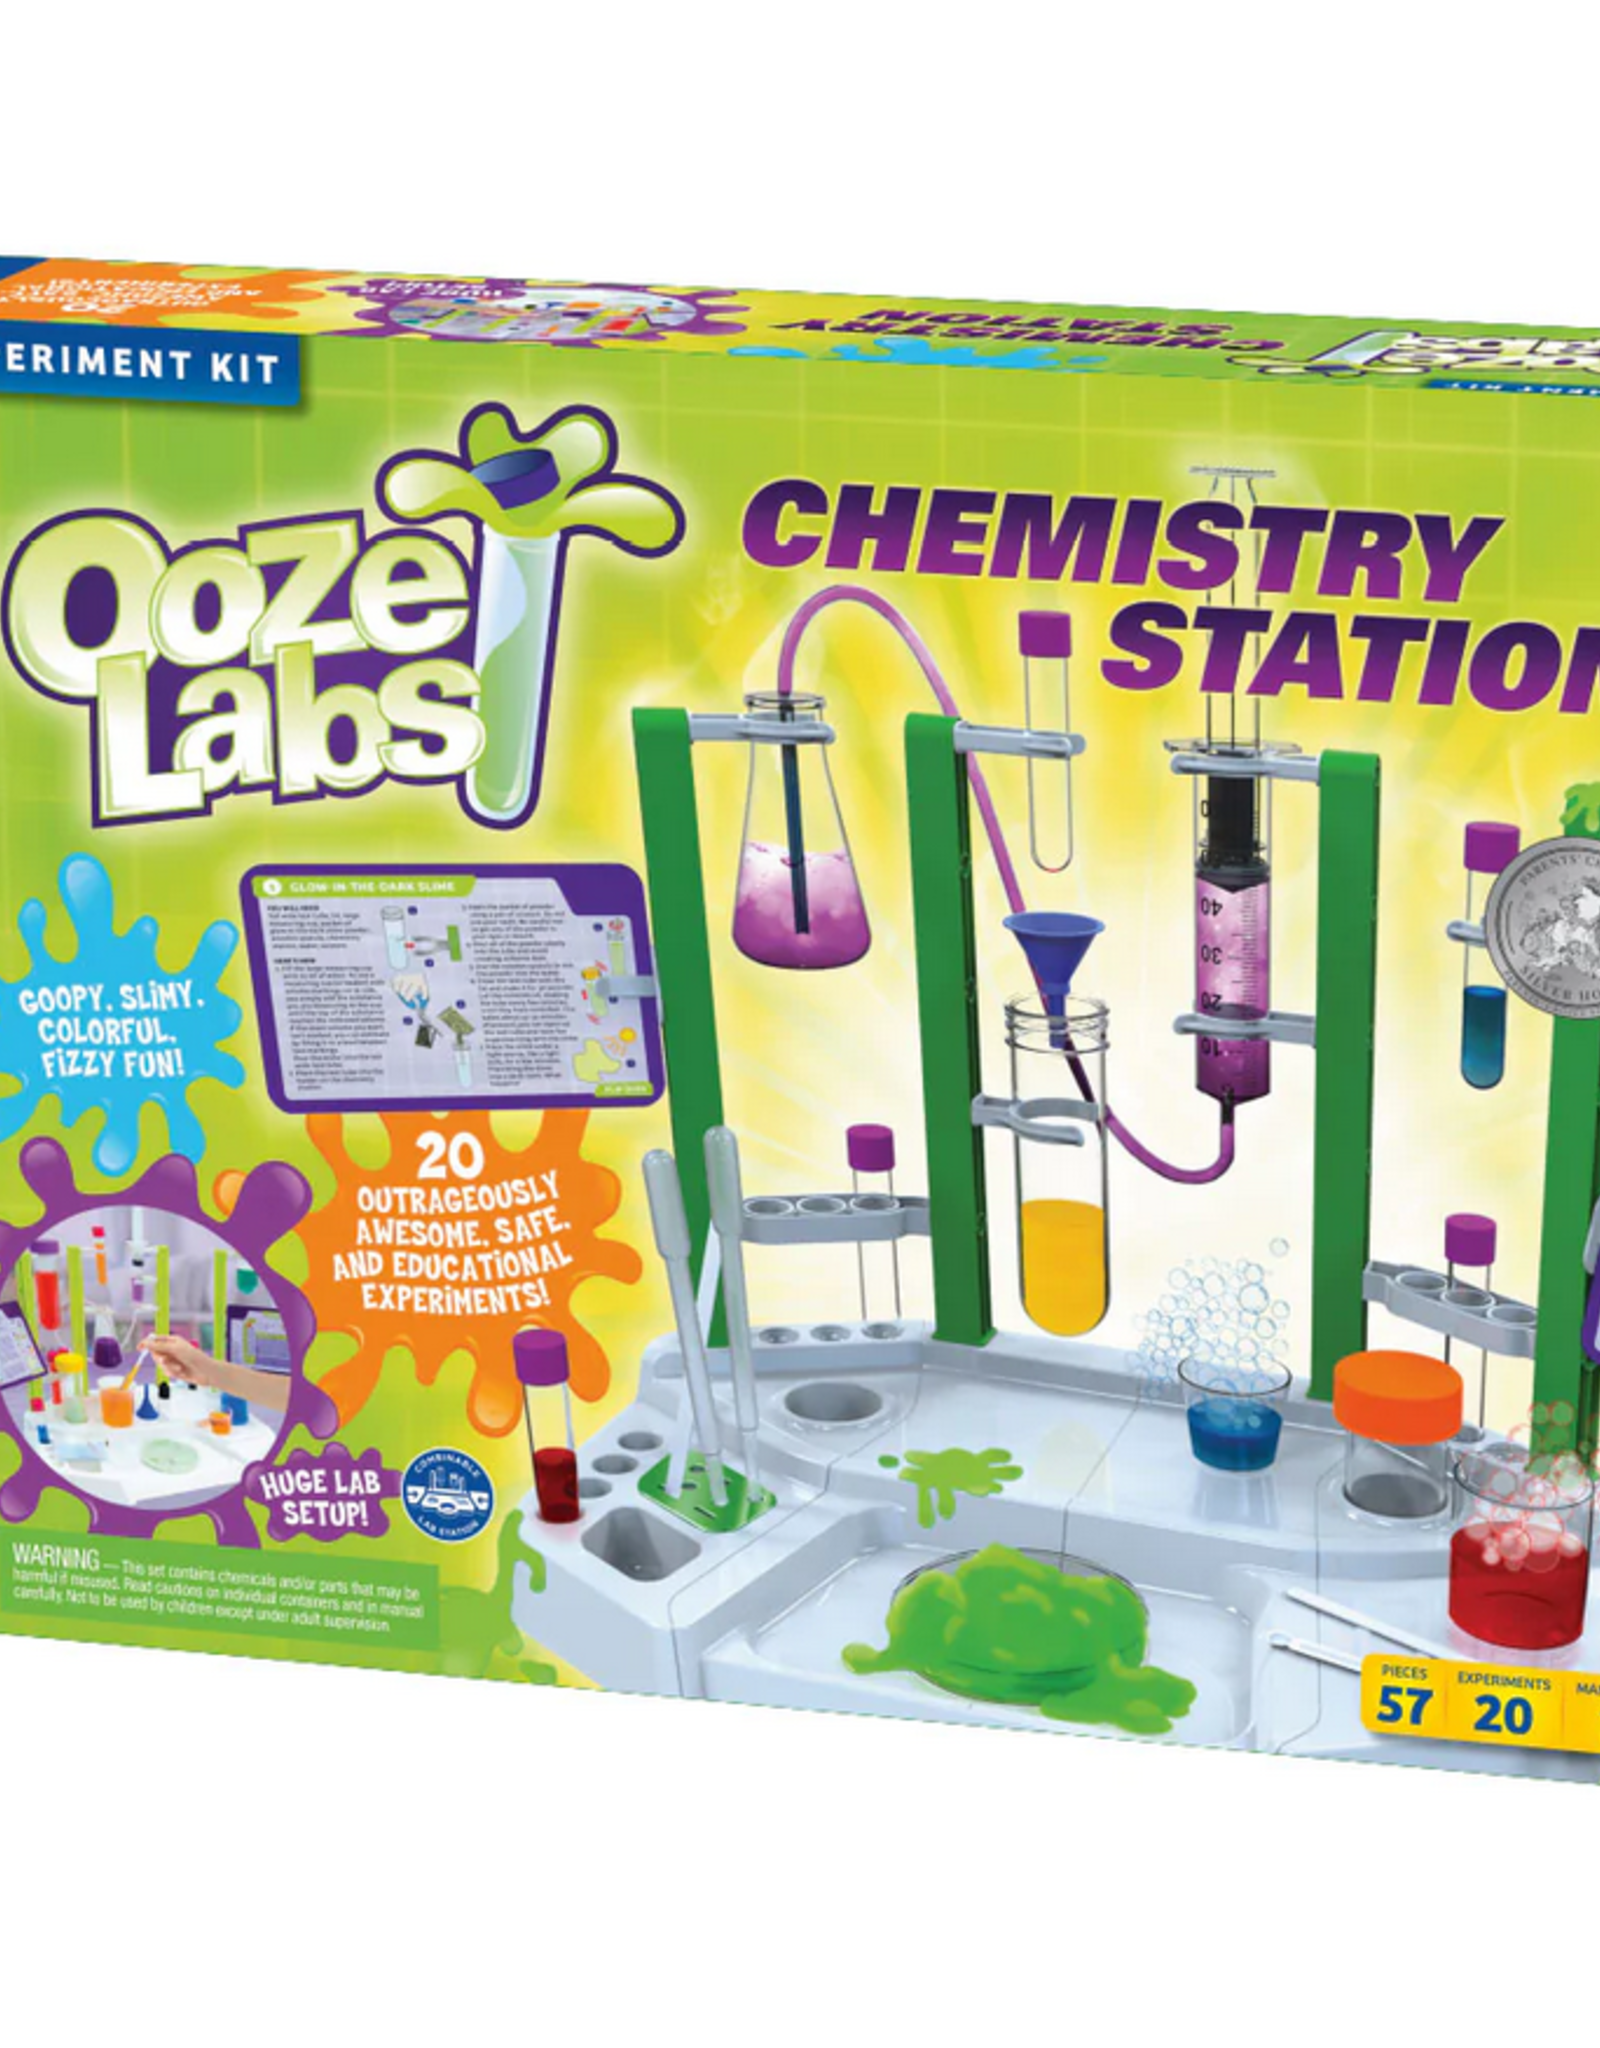 Thames & Kosmos Oozd Labs Chemistry Station